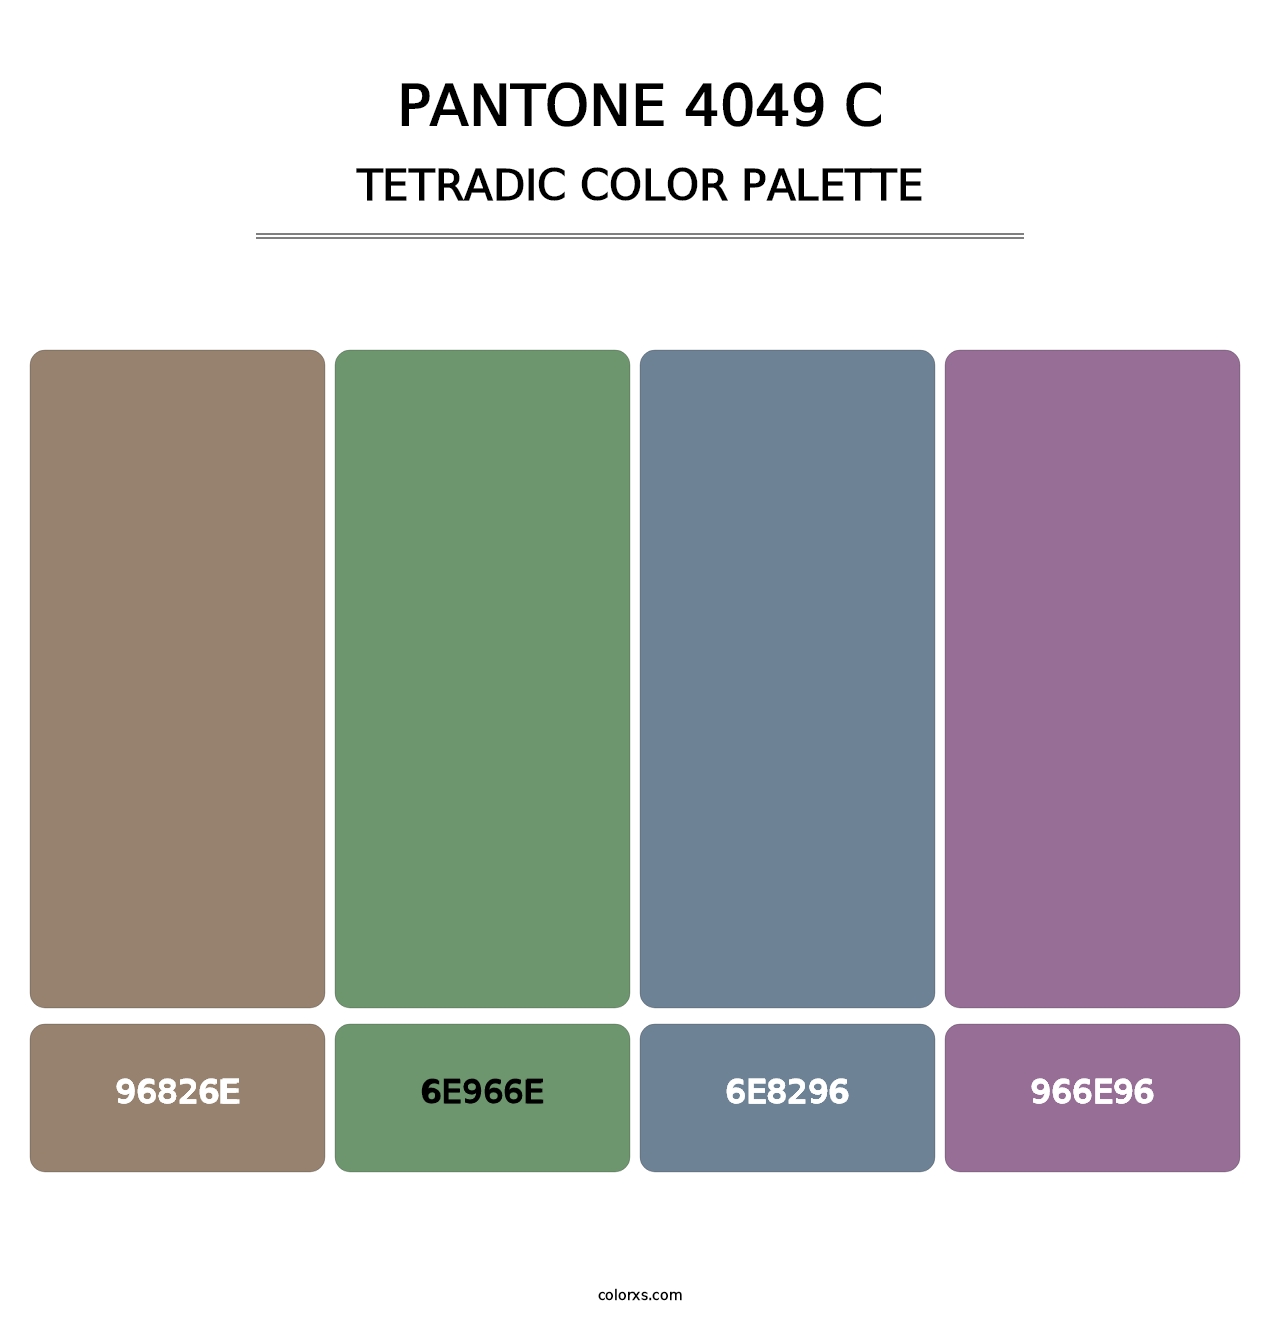 PANTONE 4049 C - Tetradic Color Palette